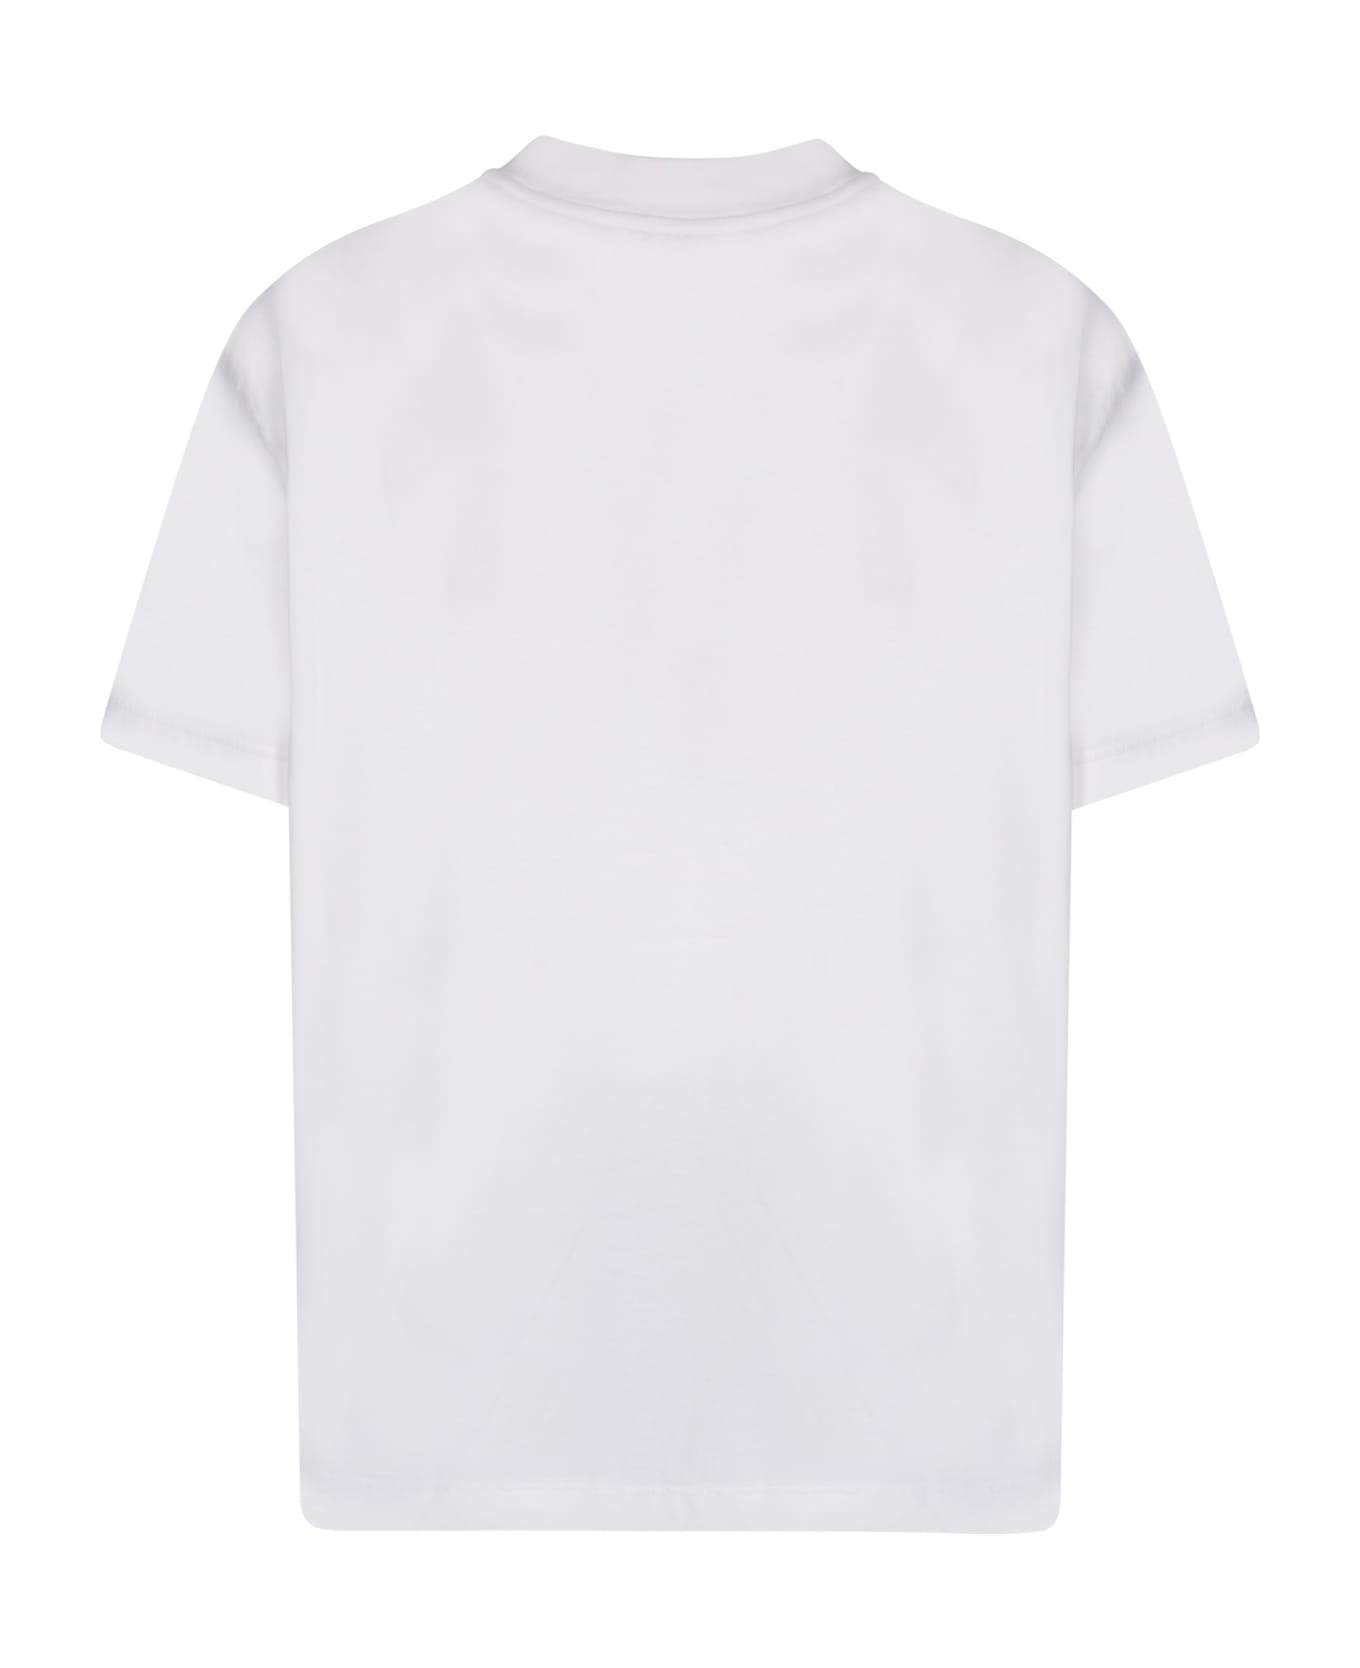 Bonsai Box Logo White T-shirt - White